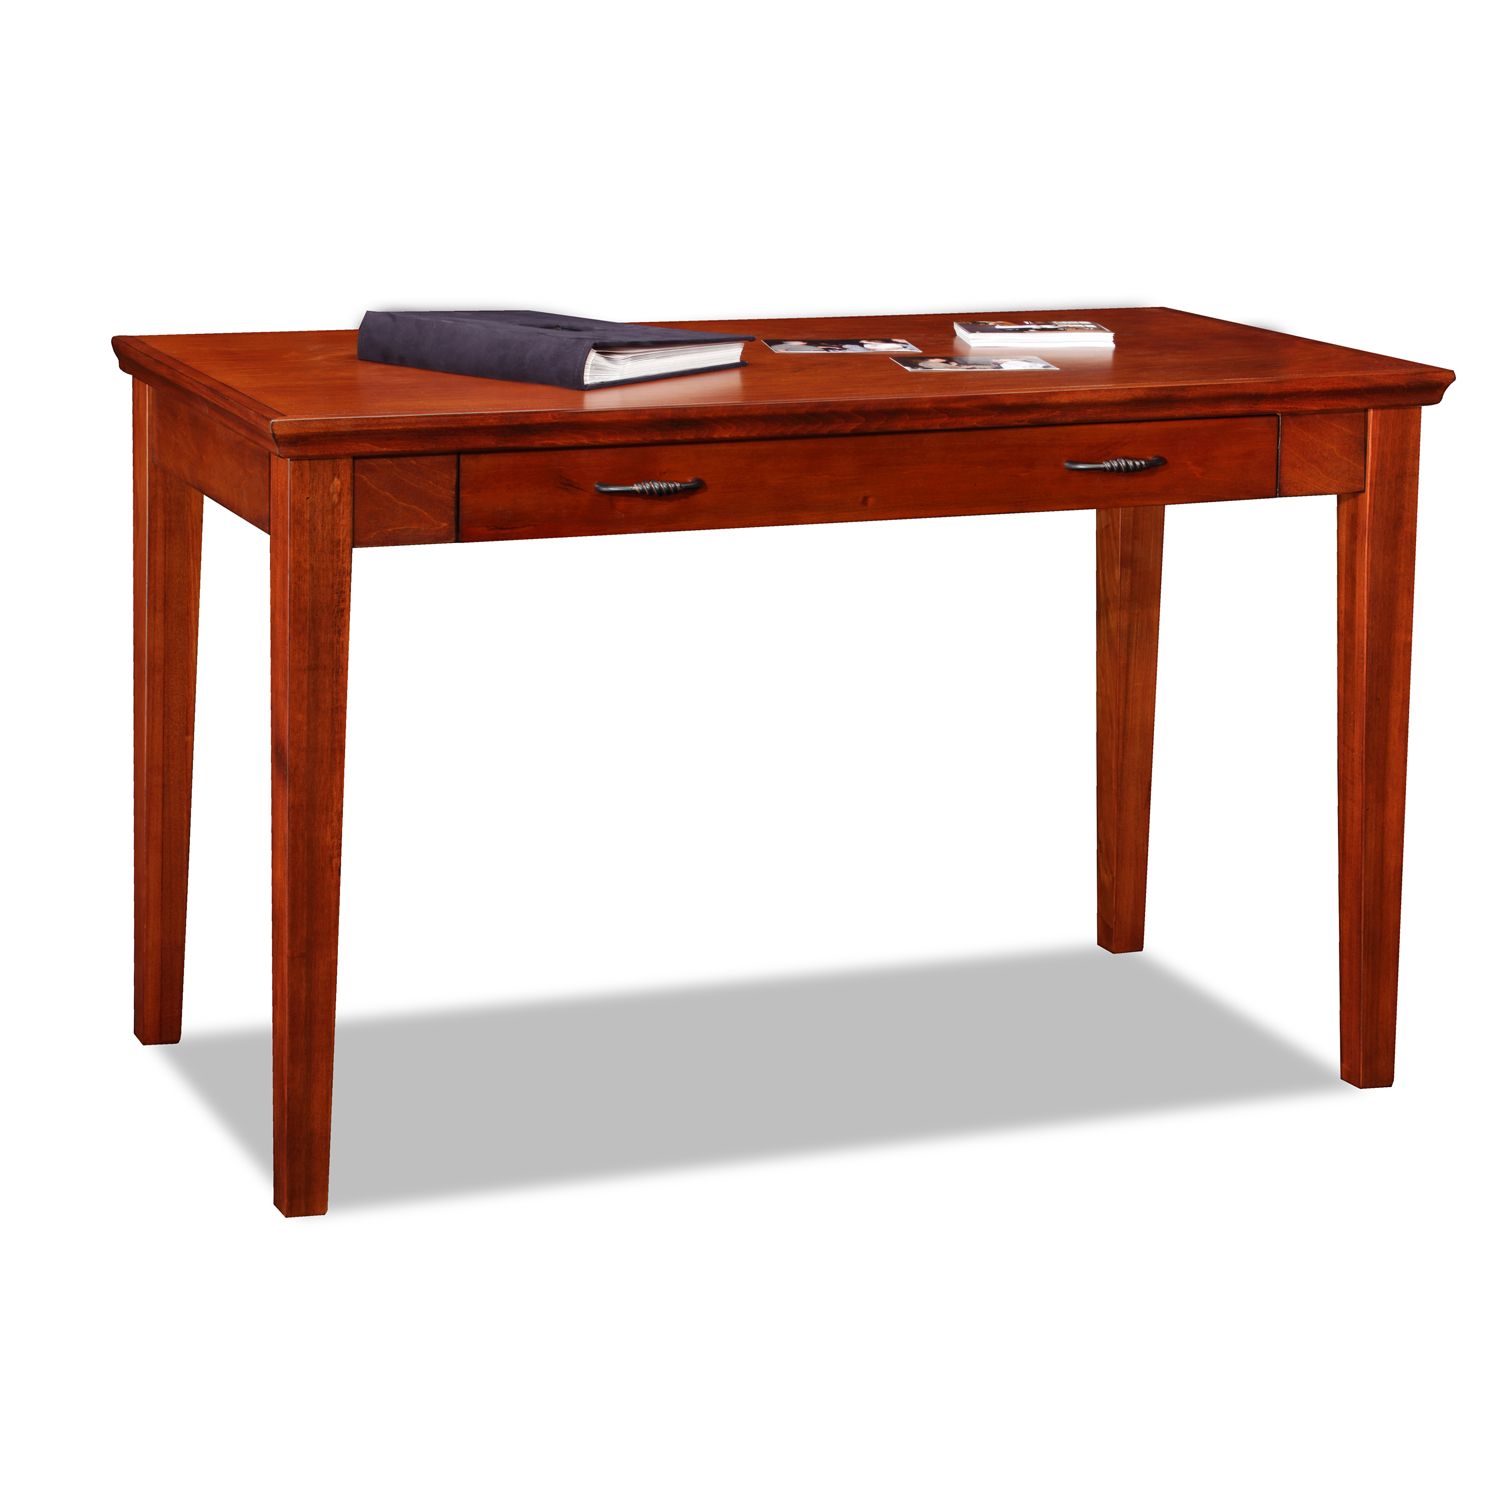 Image for Leick Furniture Desk at Kohl's.